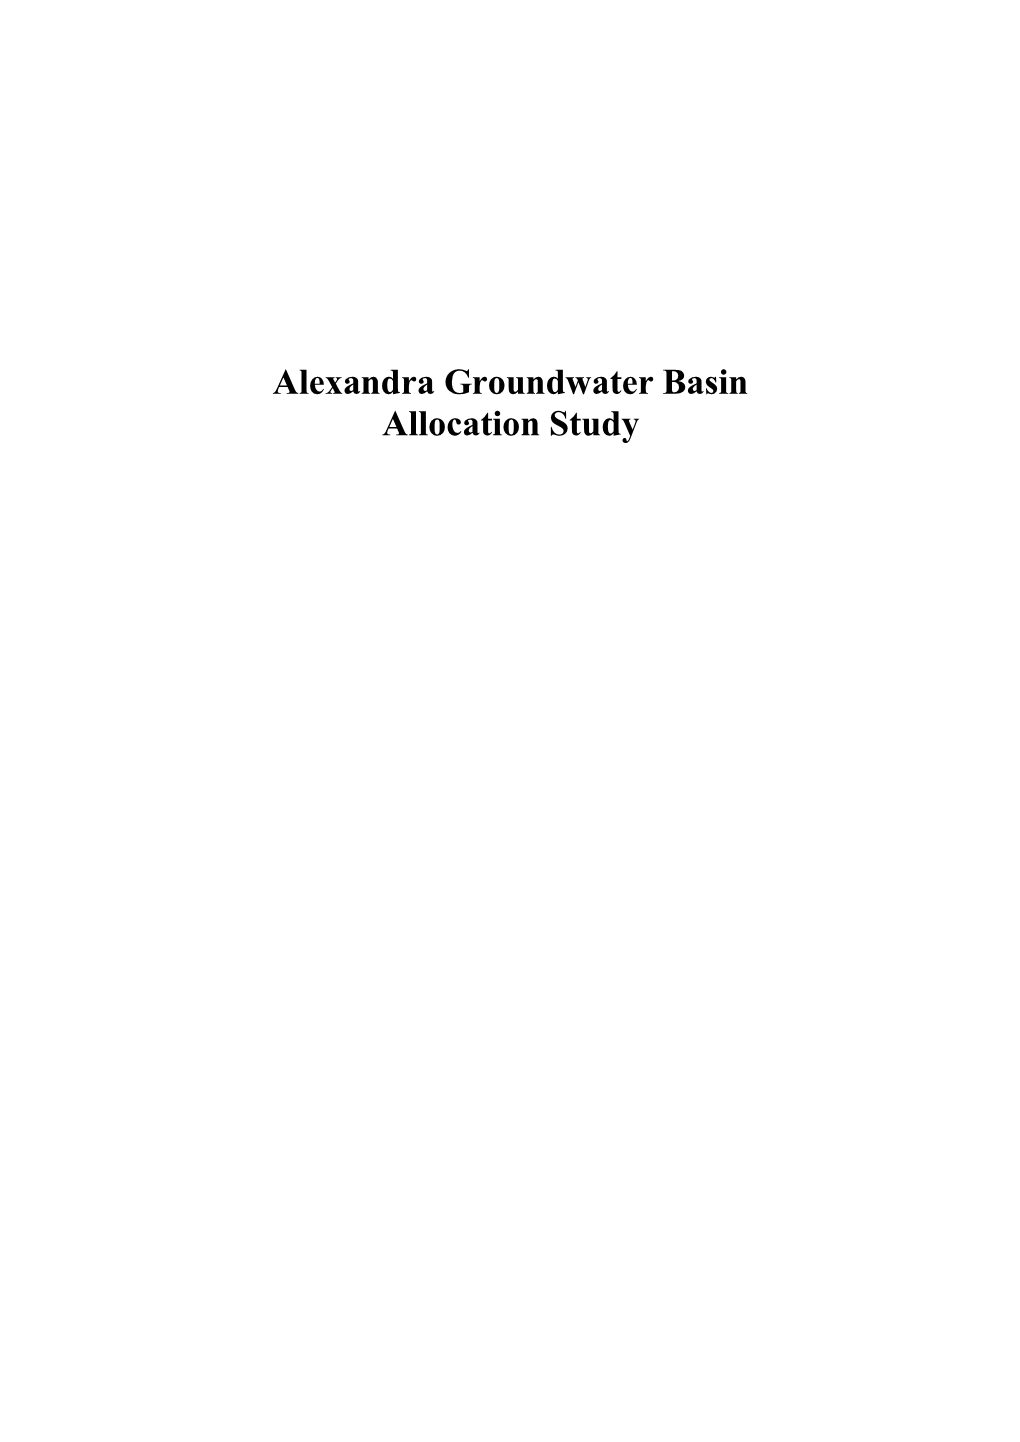 Alexandra Groundwater Basin Allocation Study